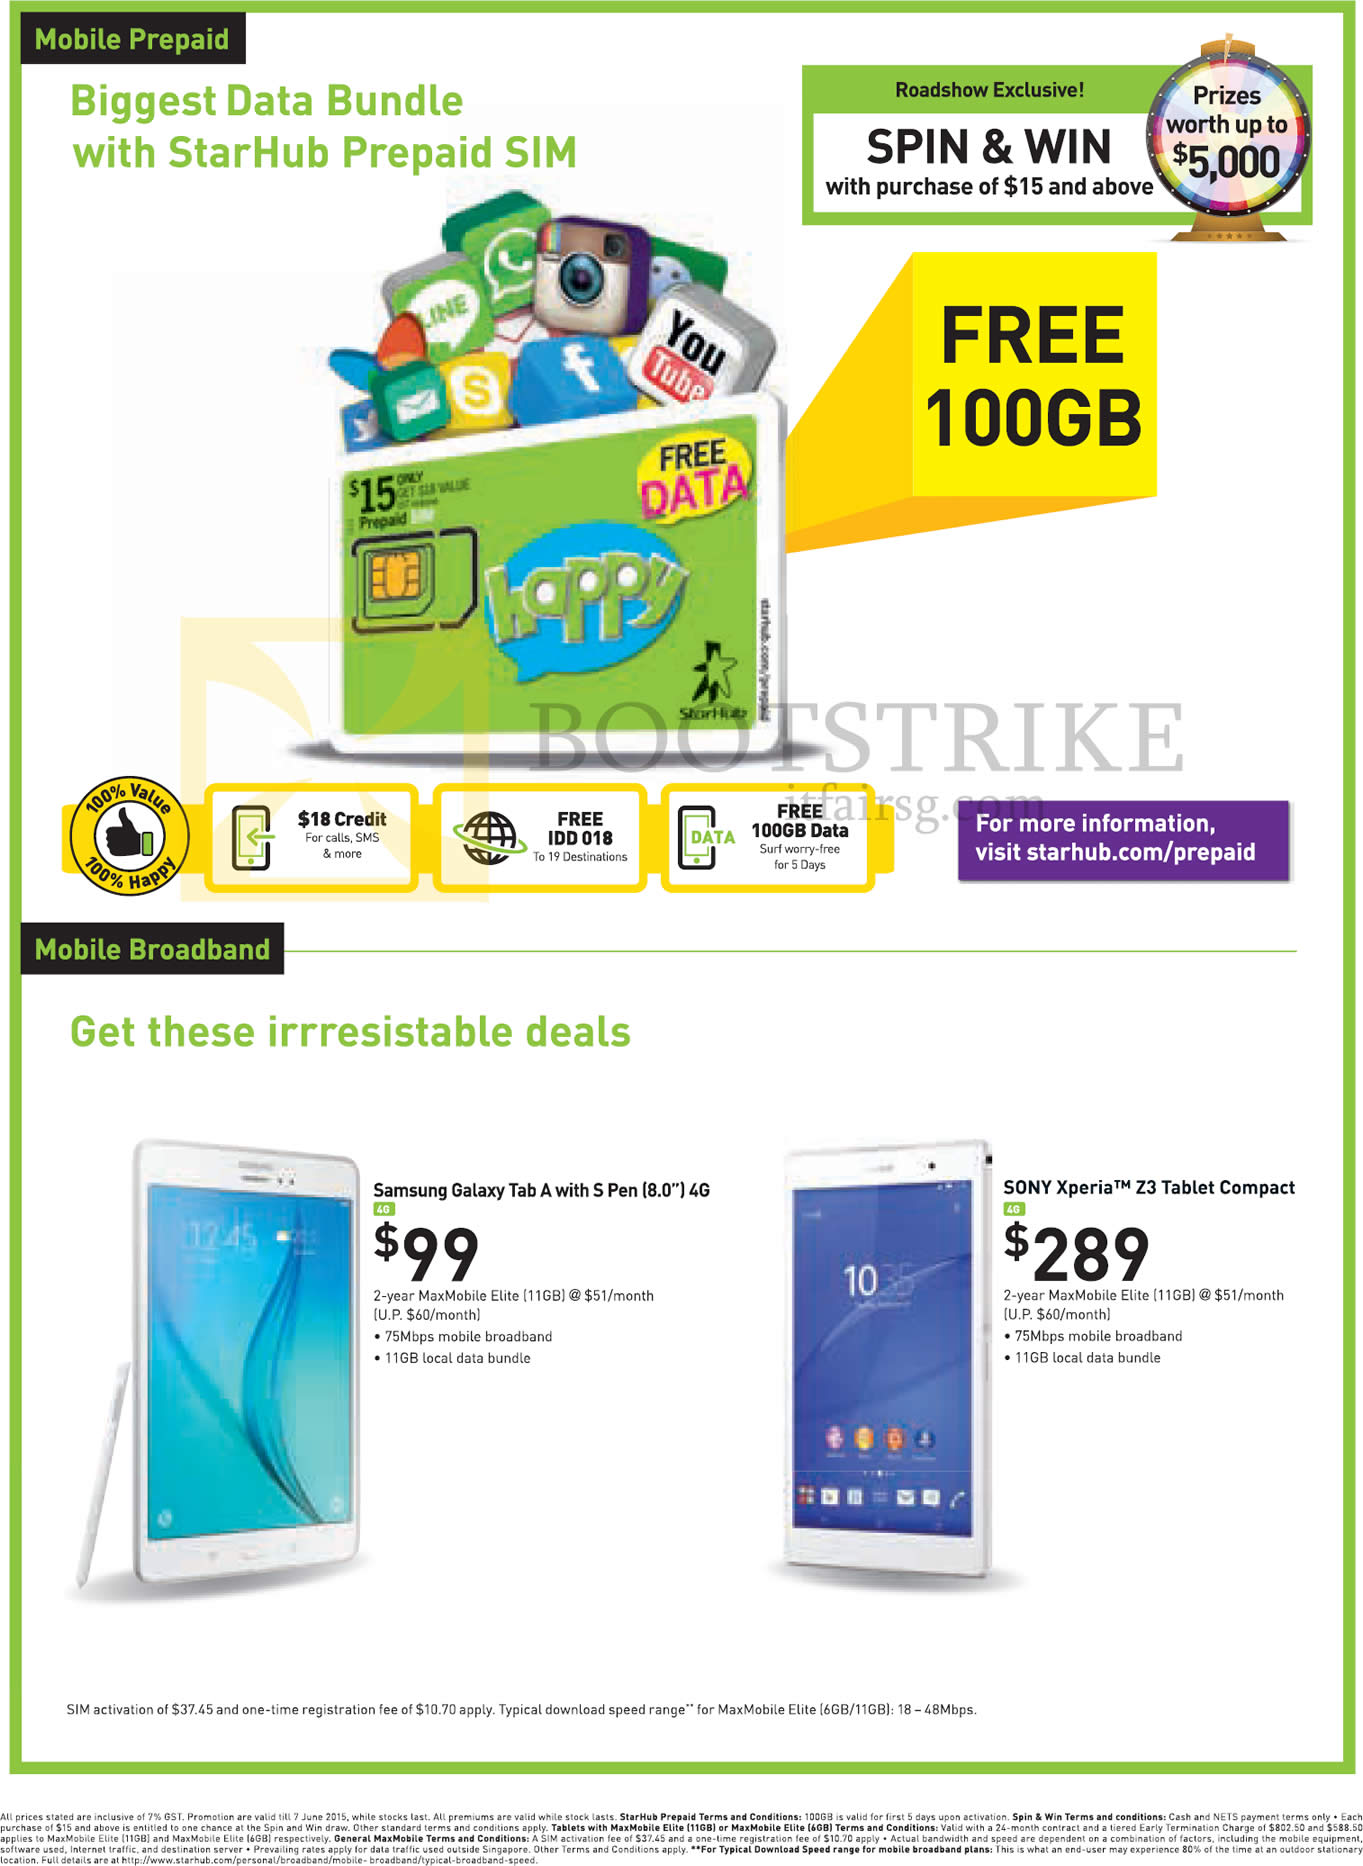 PC SHOW 2015 price list image brochure of Starhub Mobile Prepaid, Tablets Samsung Galaxy Tab A, Sony Xperia Z3 Compact